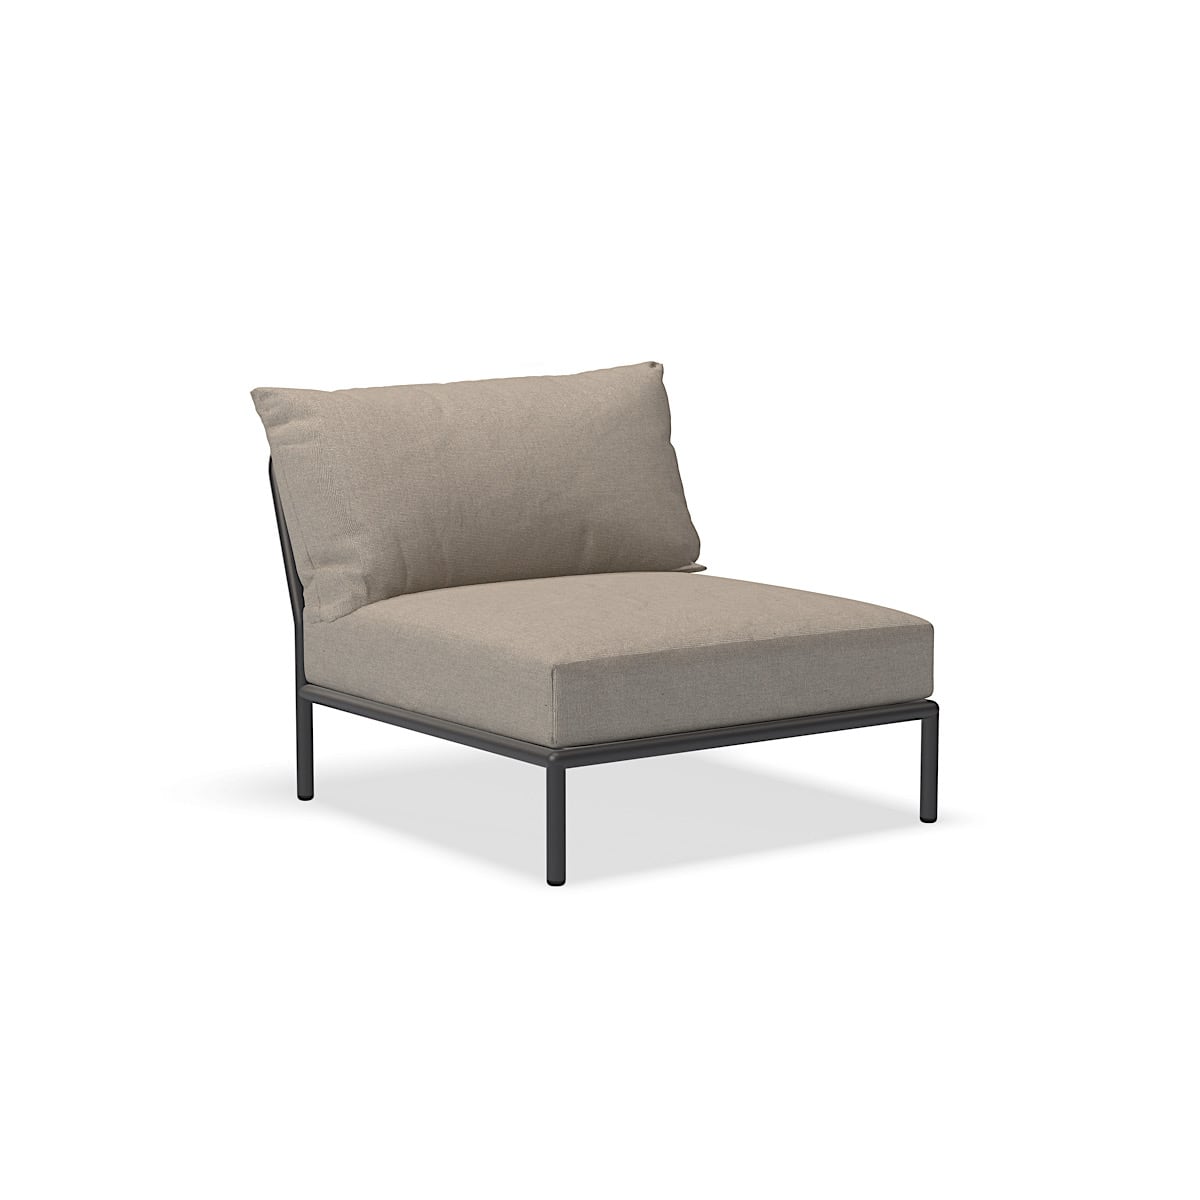 Chair - 22205-9251 - Chair, Ash (HERITAGE), dark grey structure